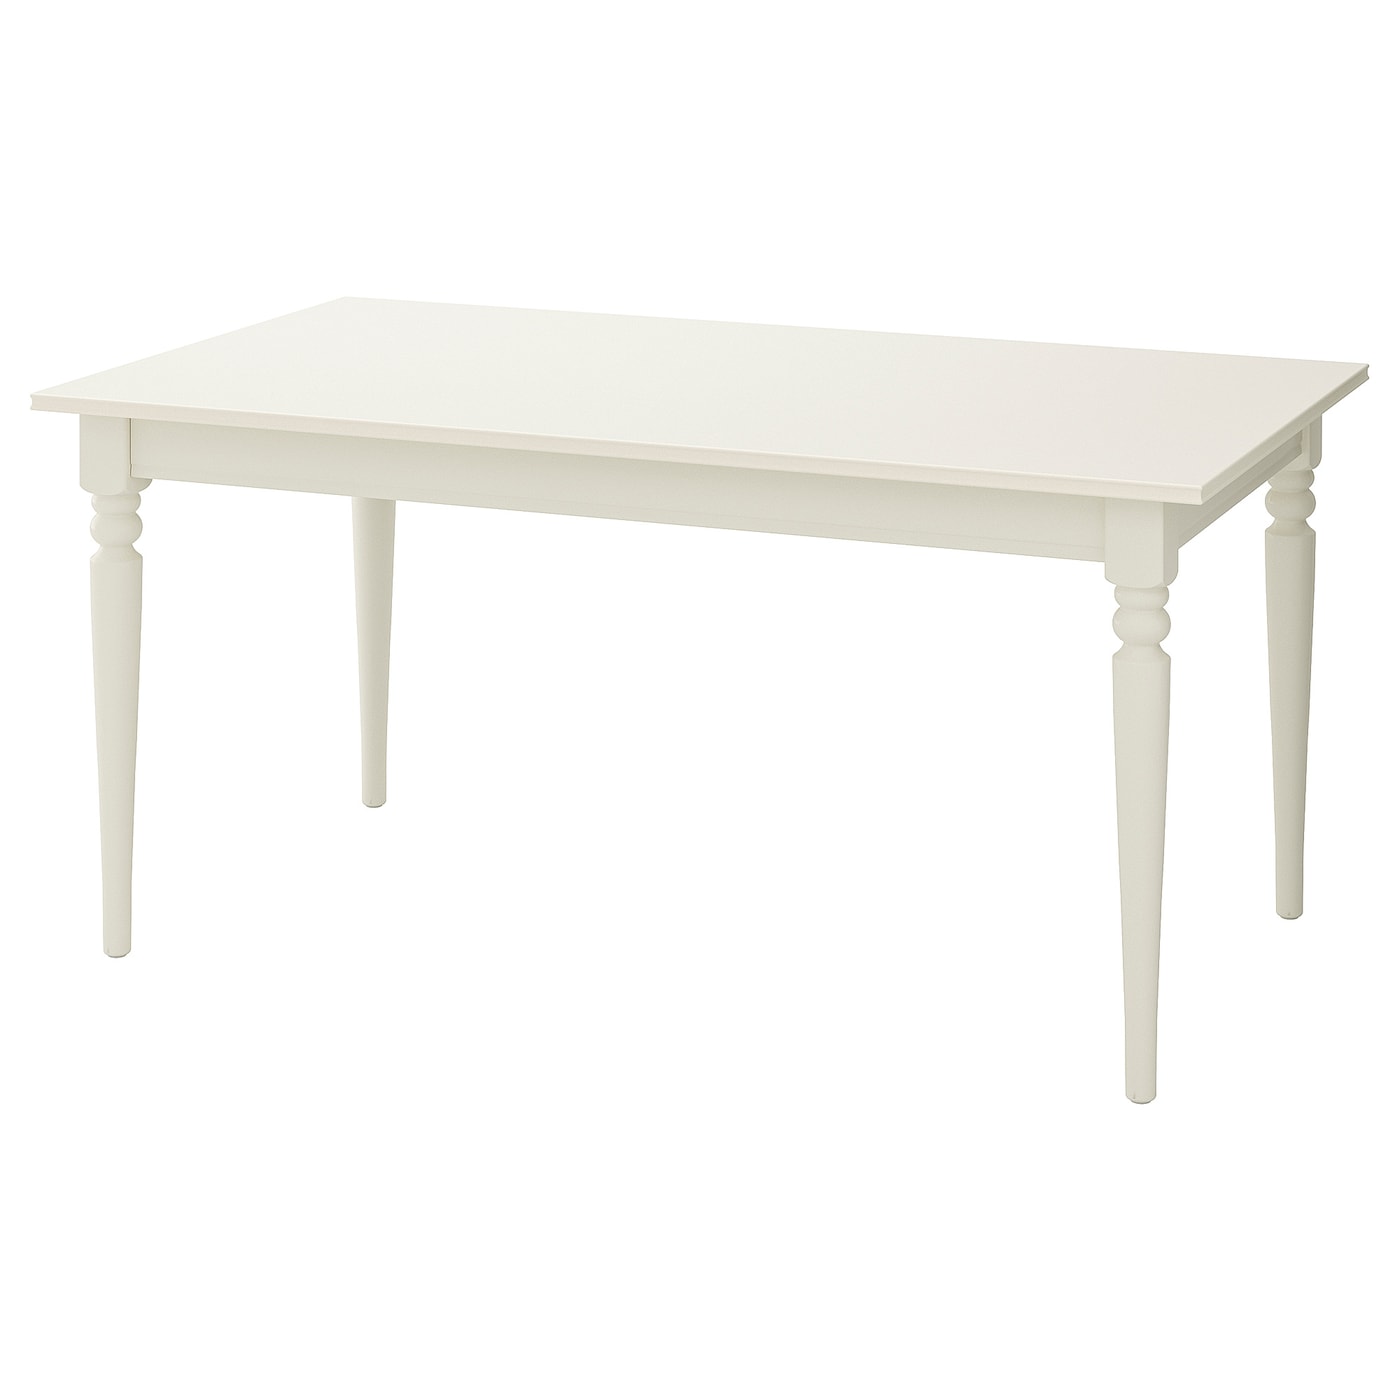 Раздвижной обеденный стол - IKEA INGATORP, 215/155х87х74 см, белый, ИНГАТОРП ИКЕА